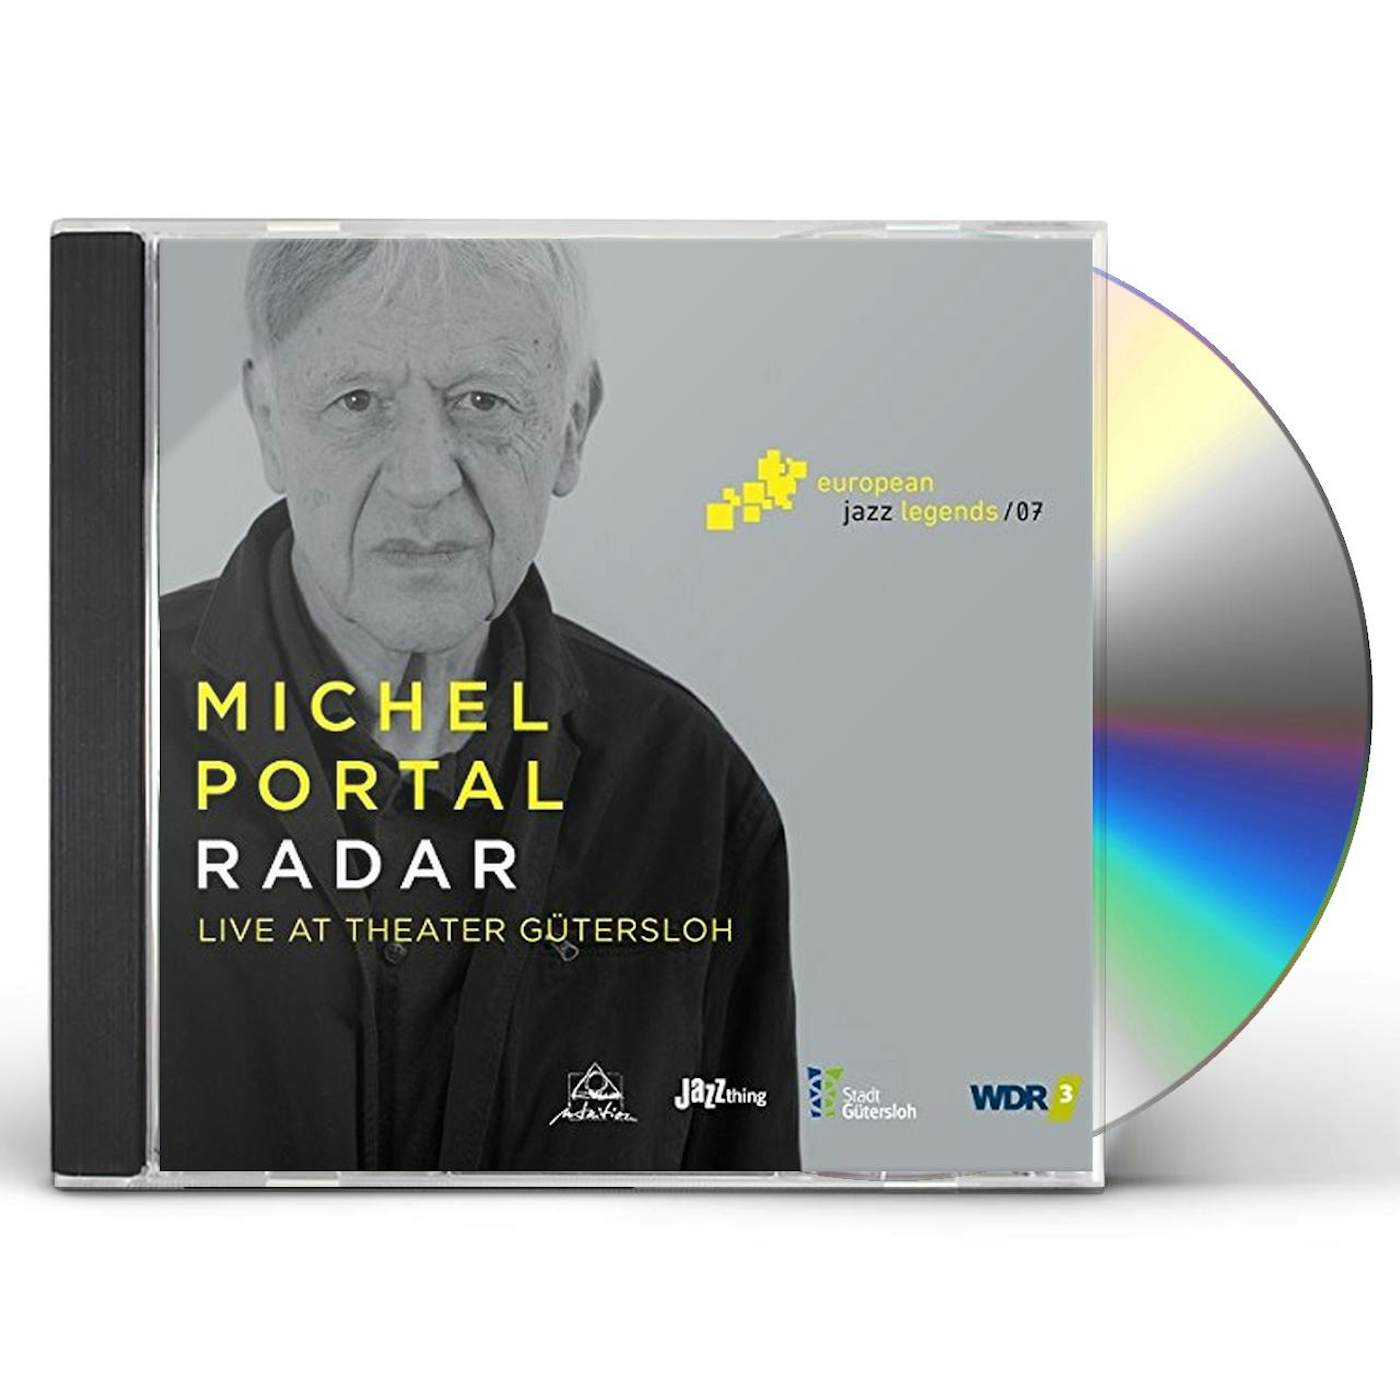 Portal RADAR CD